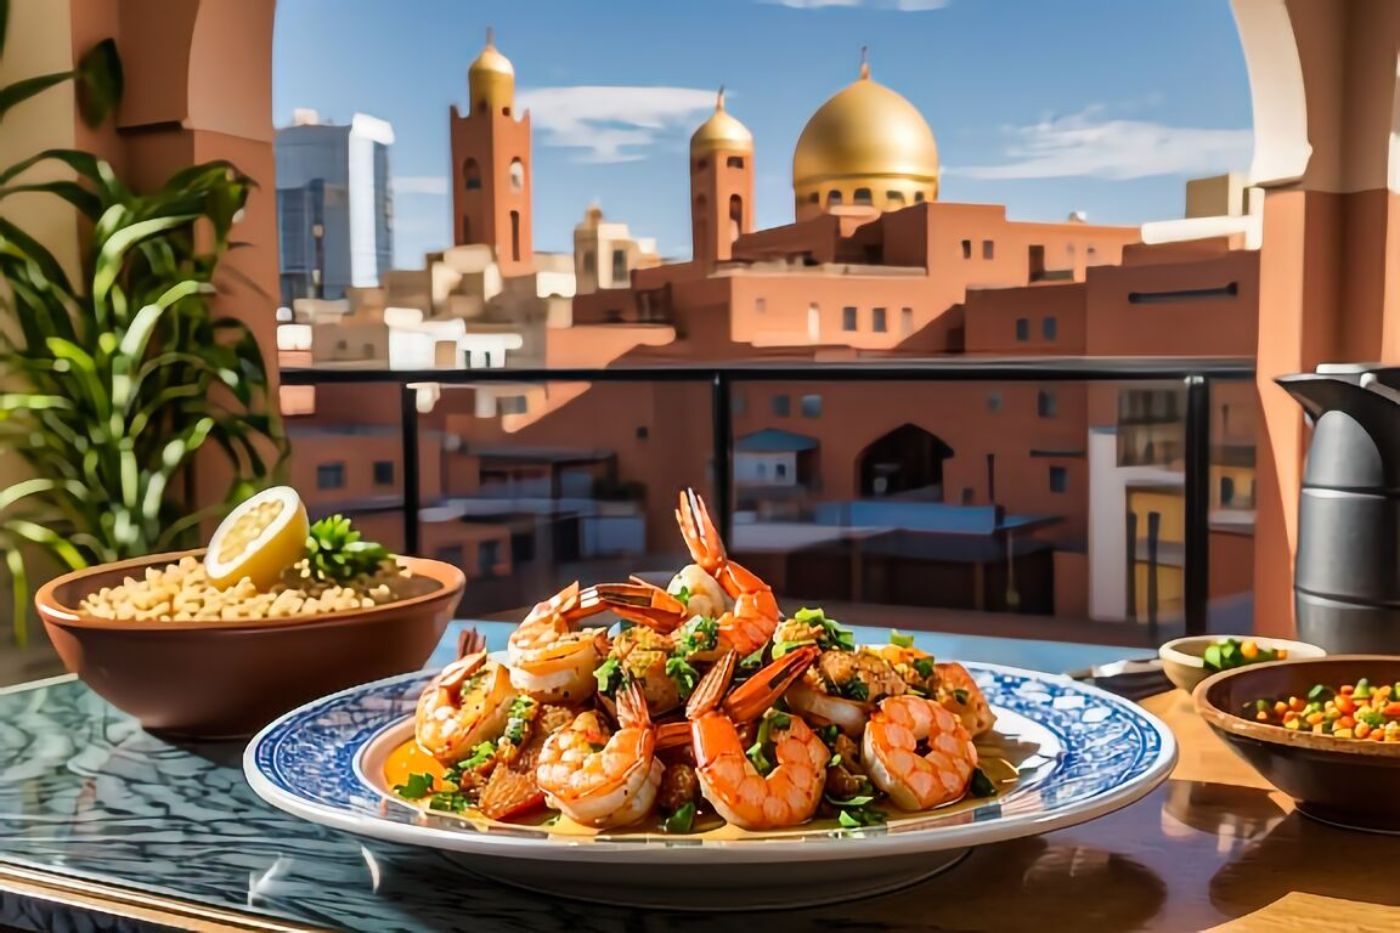 Quick Moroccan Shrimp Skillet Recipe